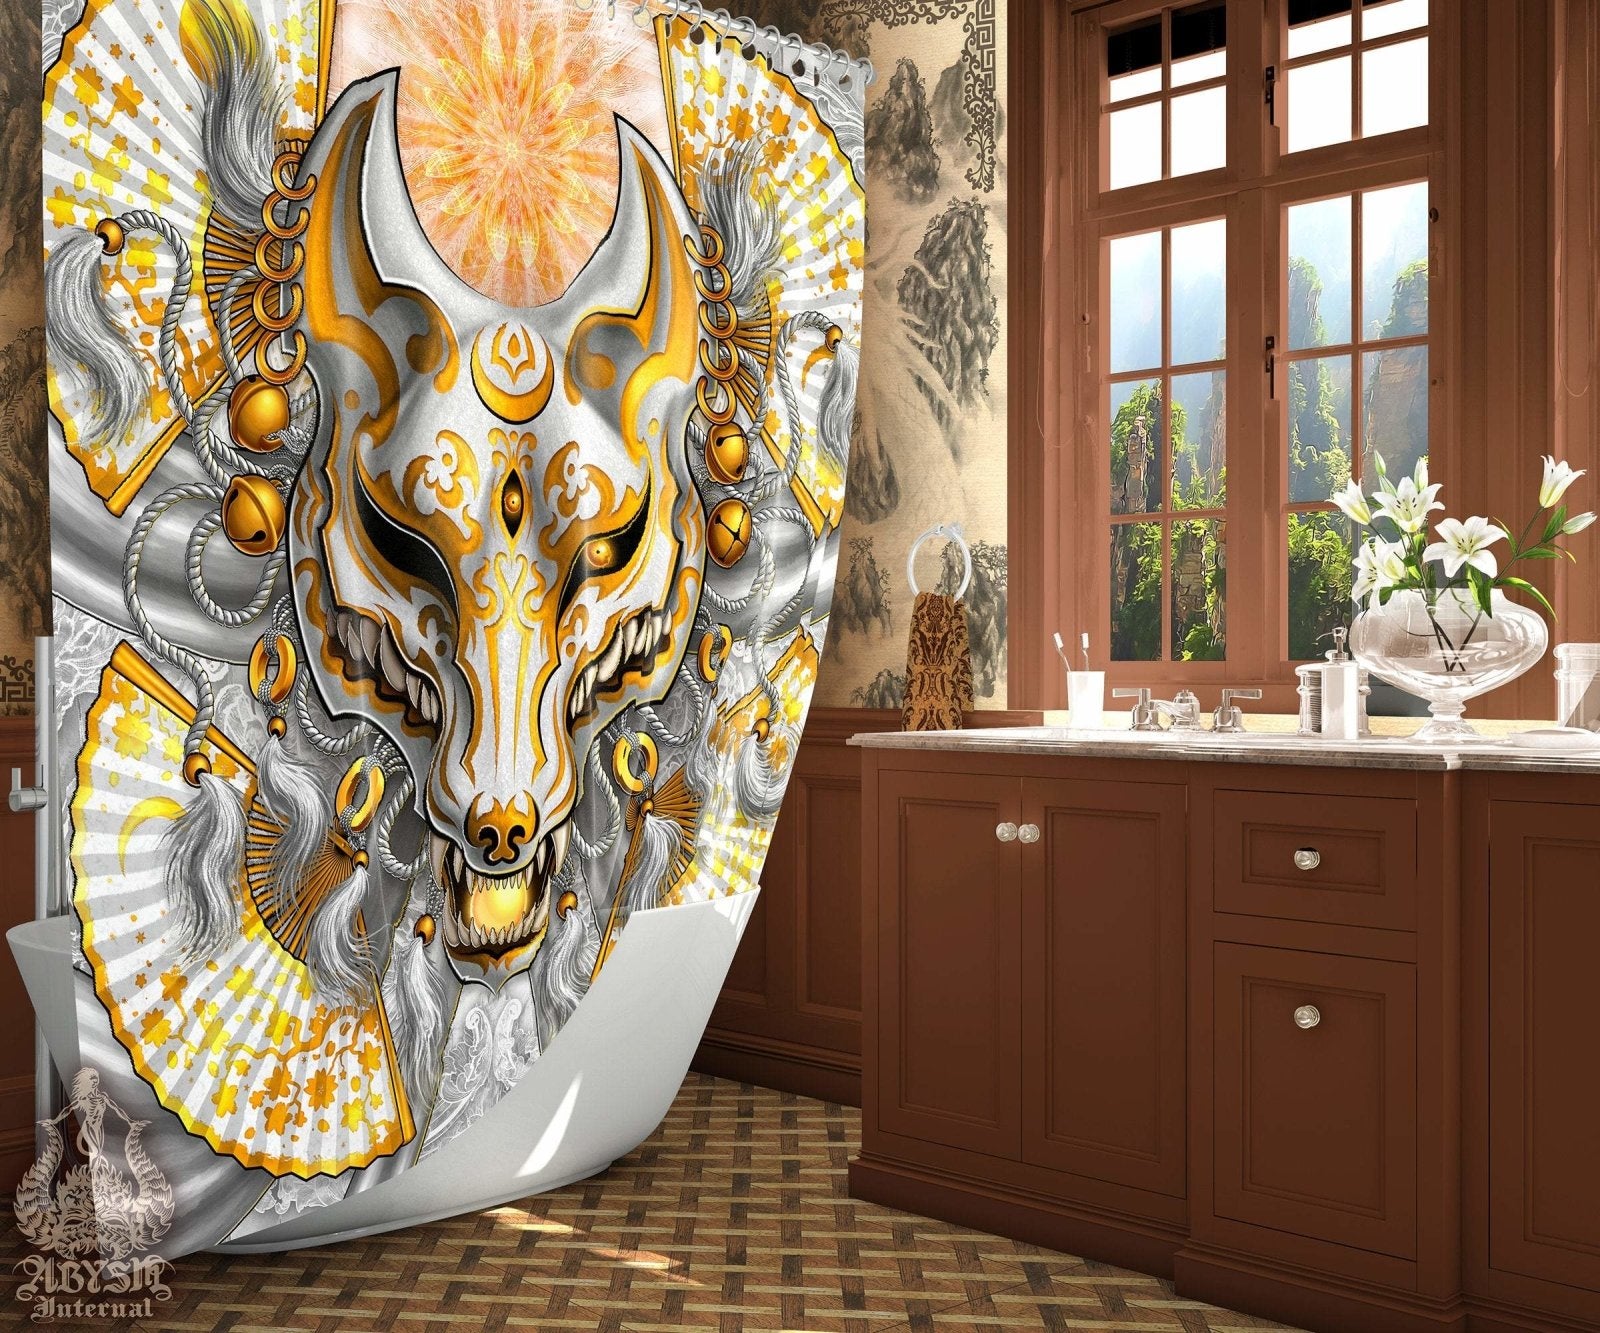 Anime Shower Curtain, Kitsune Mask, Okami, Fantasy and Gamer Bathroom Decor, Fox Art - White & Gold - Abysm Internal